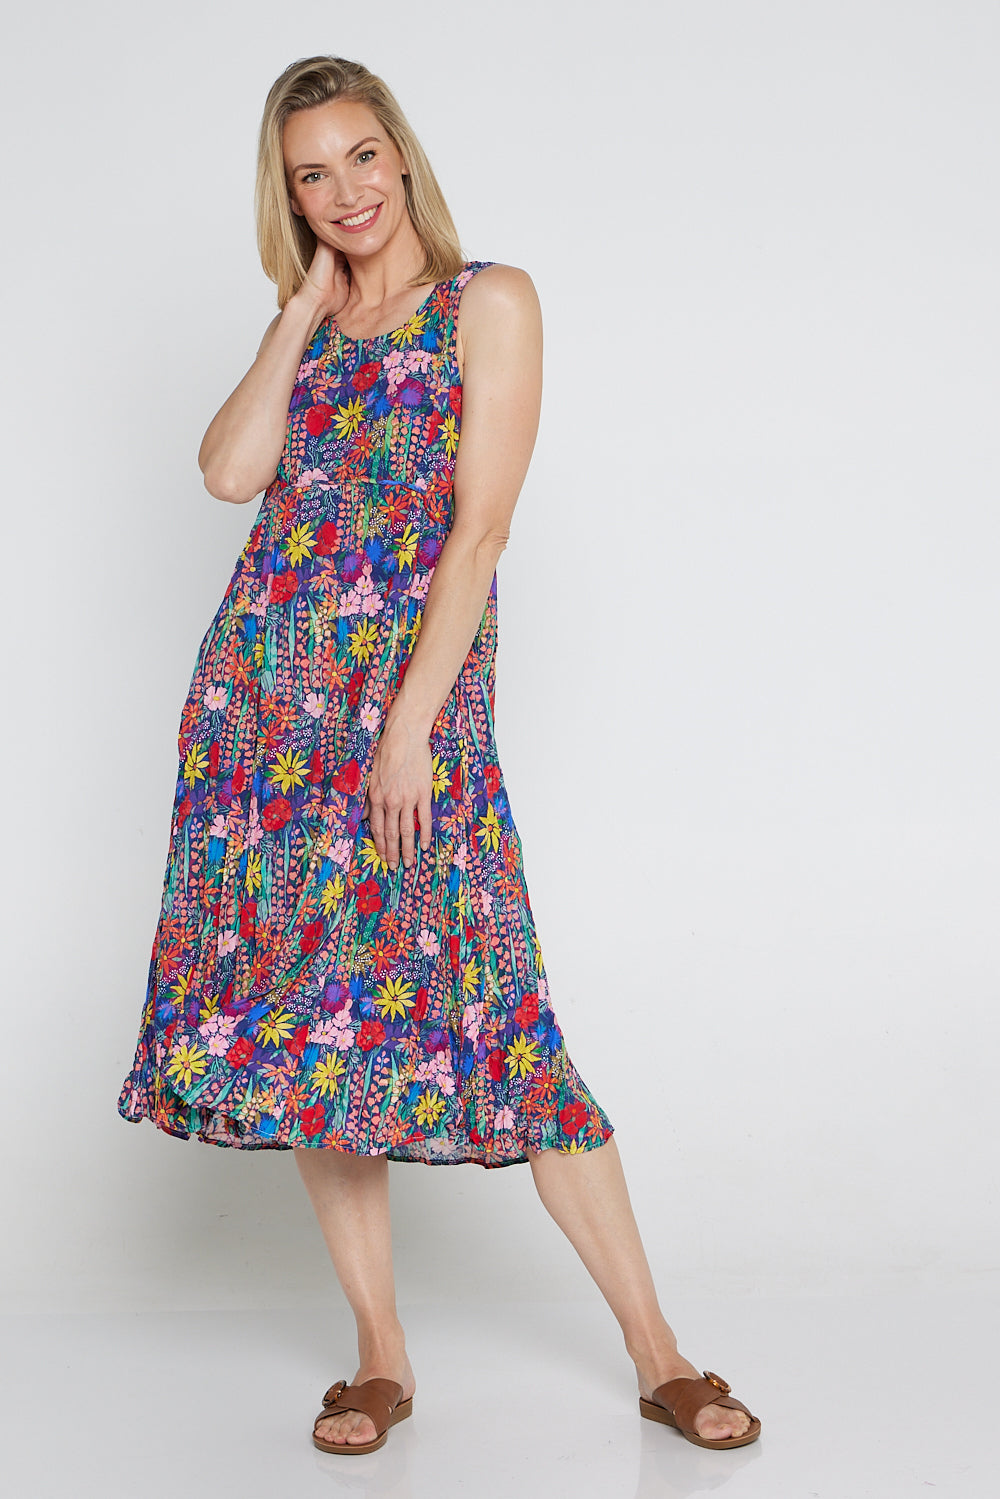 Adeline Dress - Rainbow Wildflowers